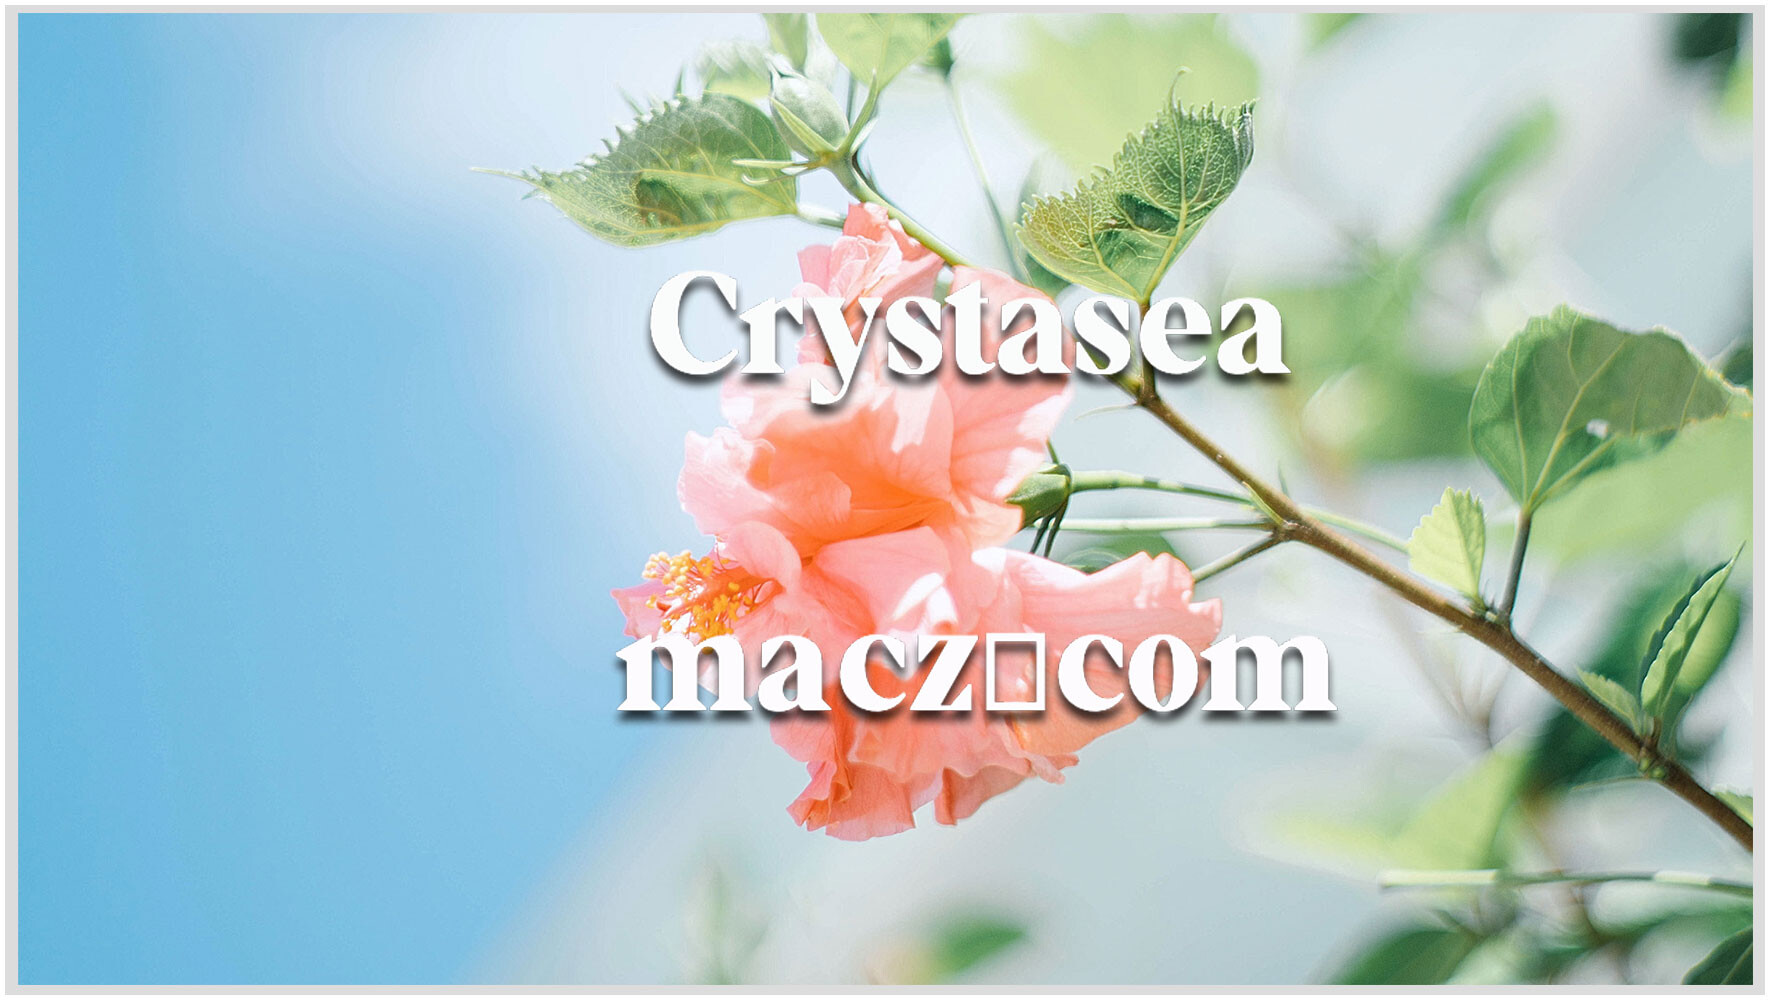 Crystasea现代粗体衬线字体